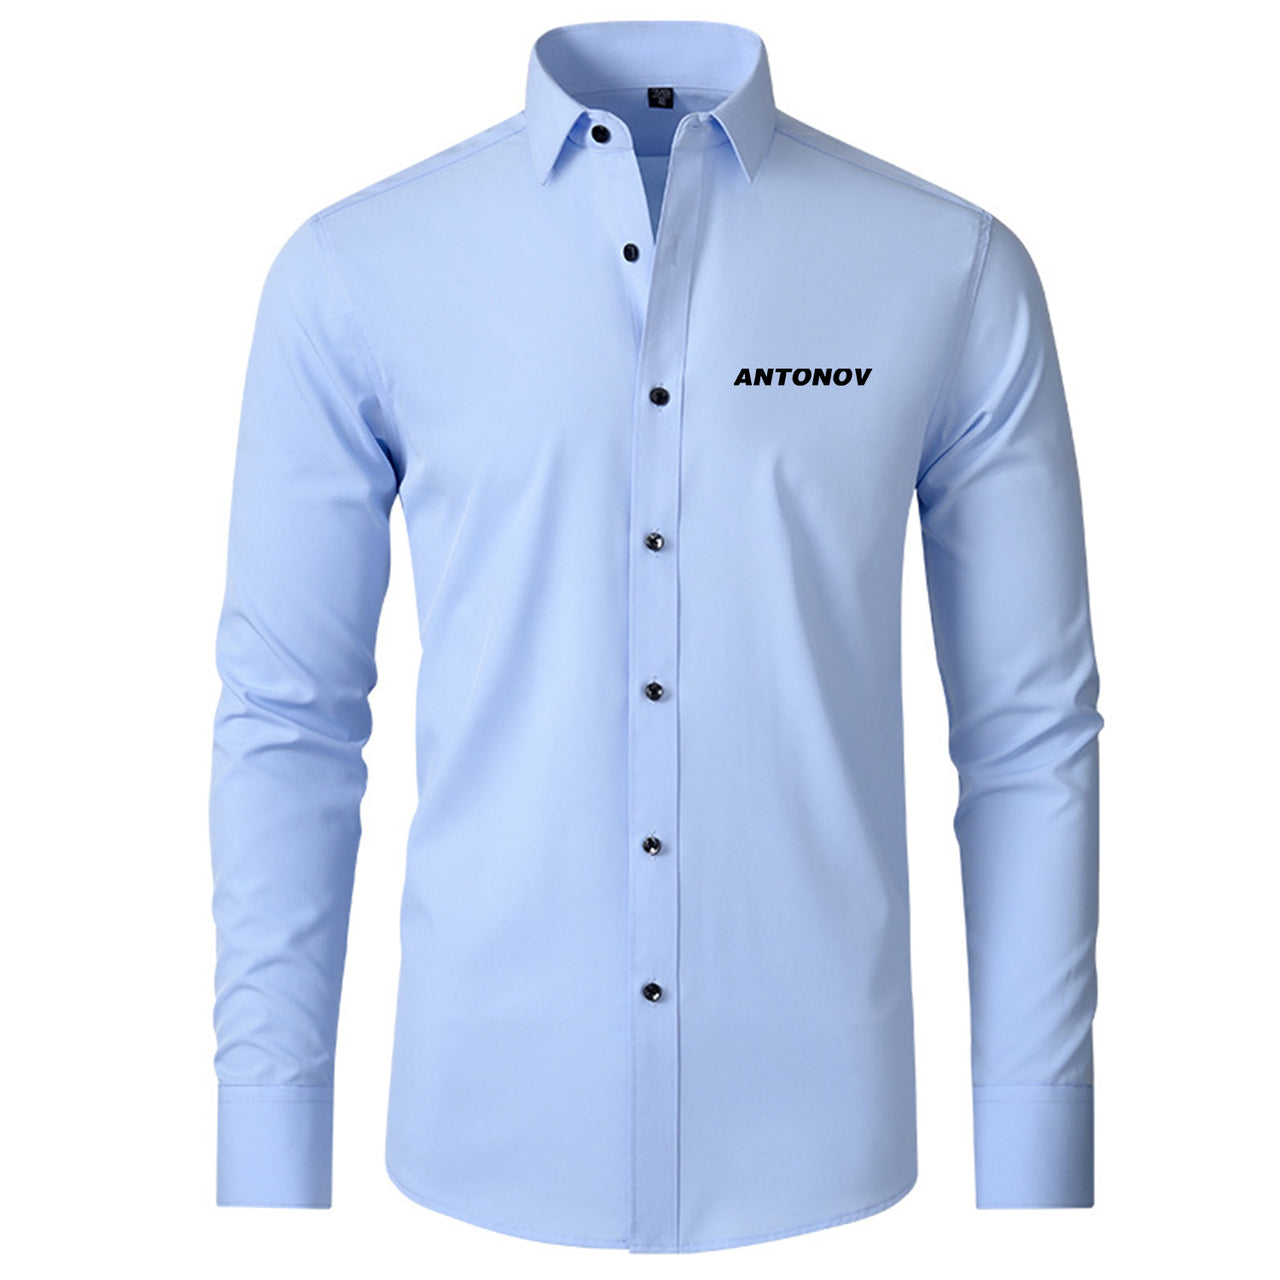 Antonov & Text Designed Long Sleeve Shirts